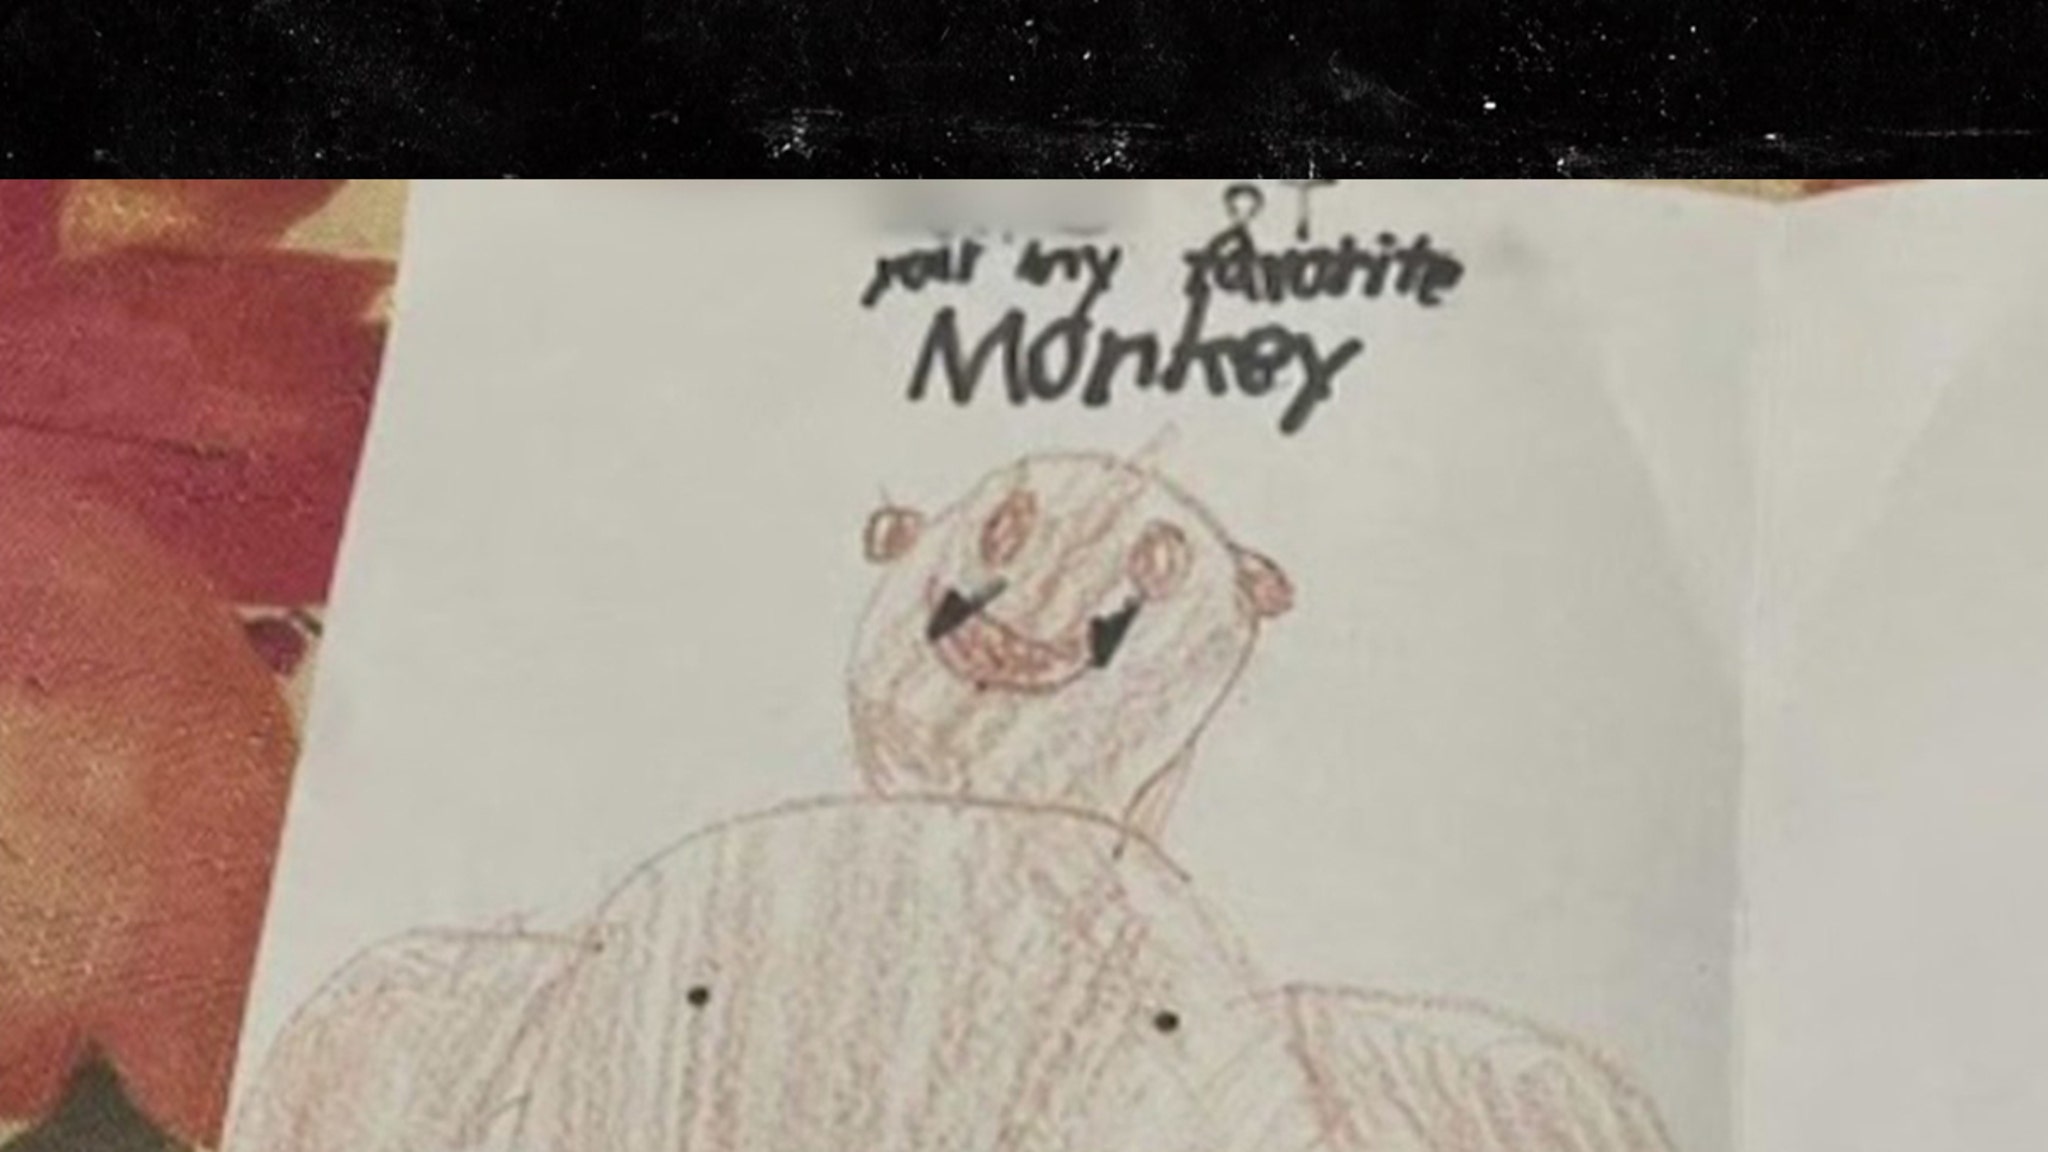 Racist Drawings Like ‘You’re My Favorite Monkey’ Targeted at Black Elementary School Students